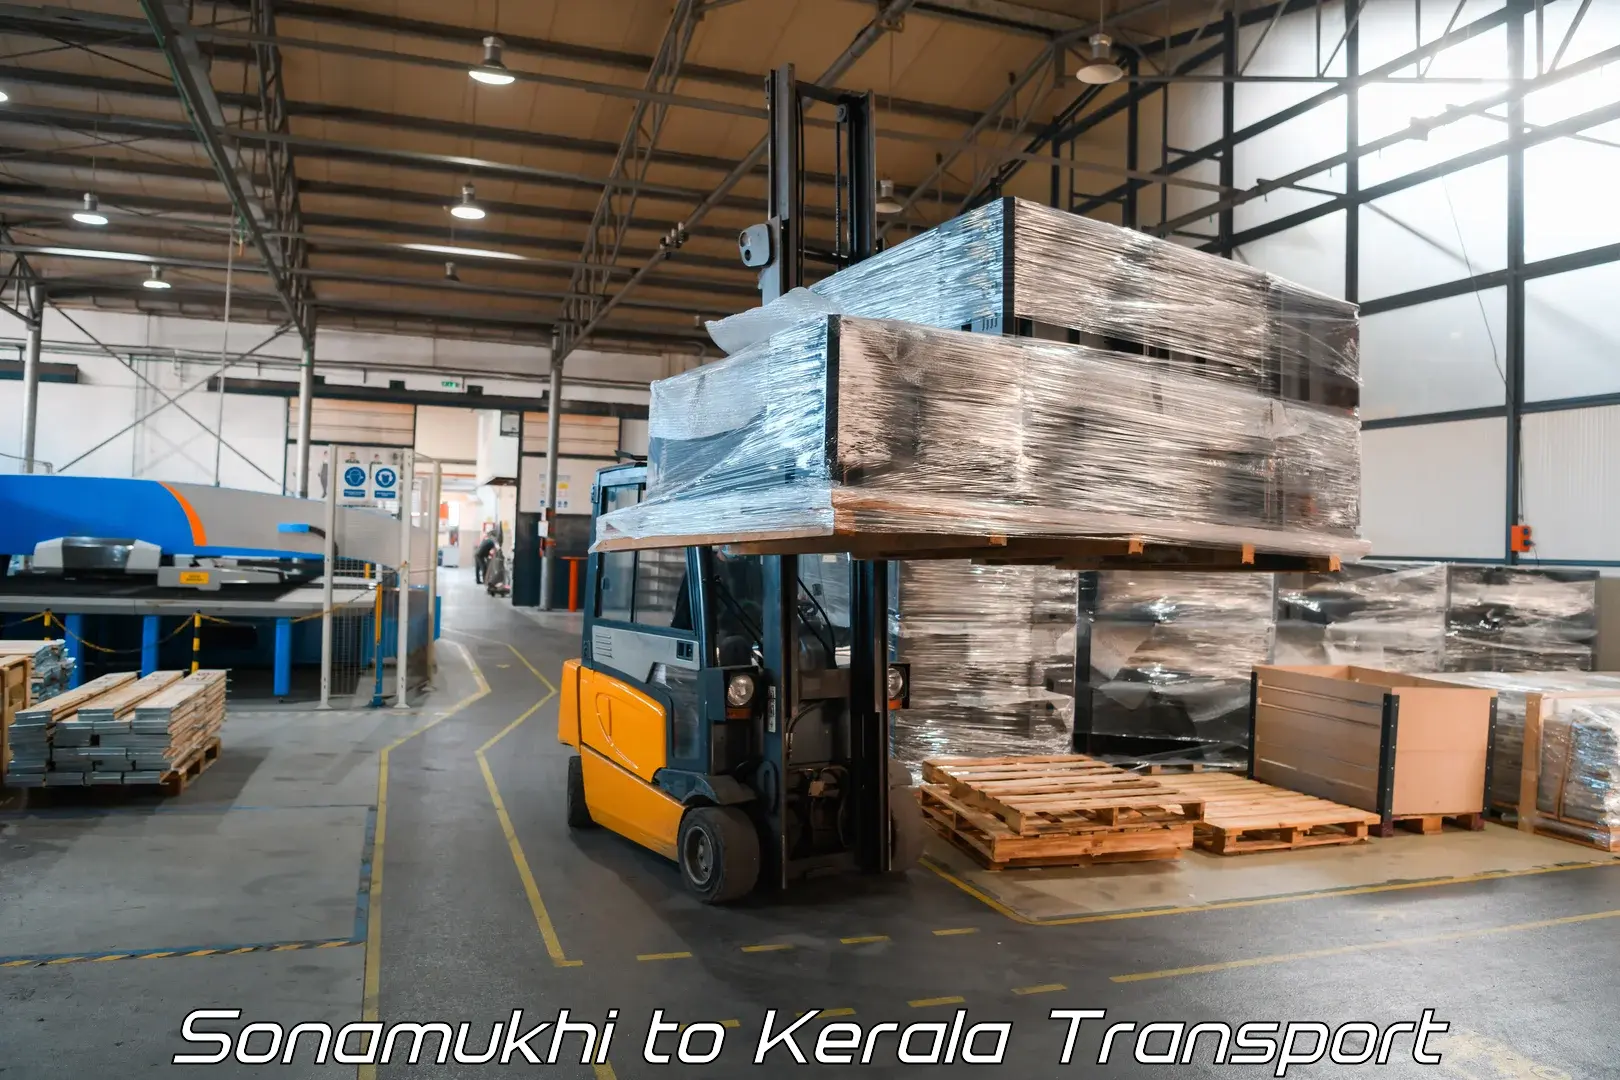 Transport in sharing Sonamukhi to Akaloor